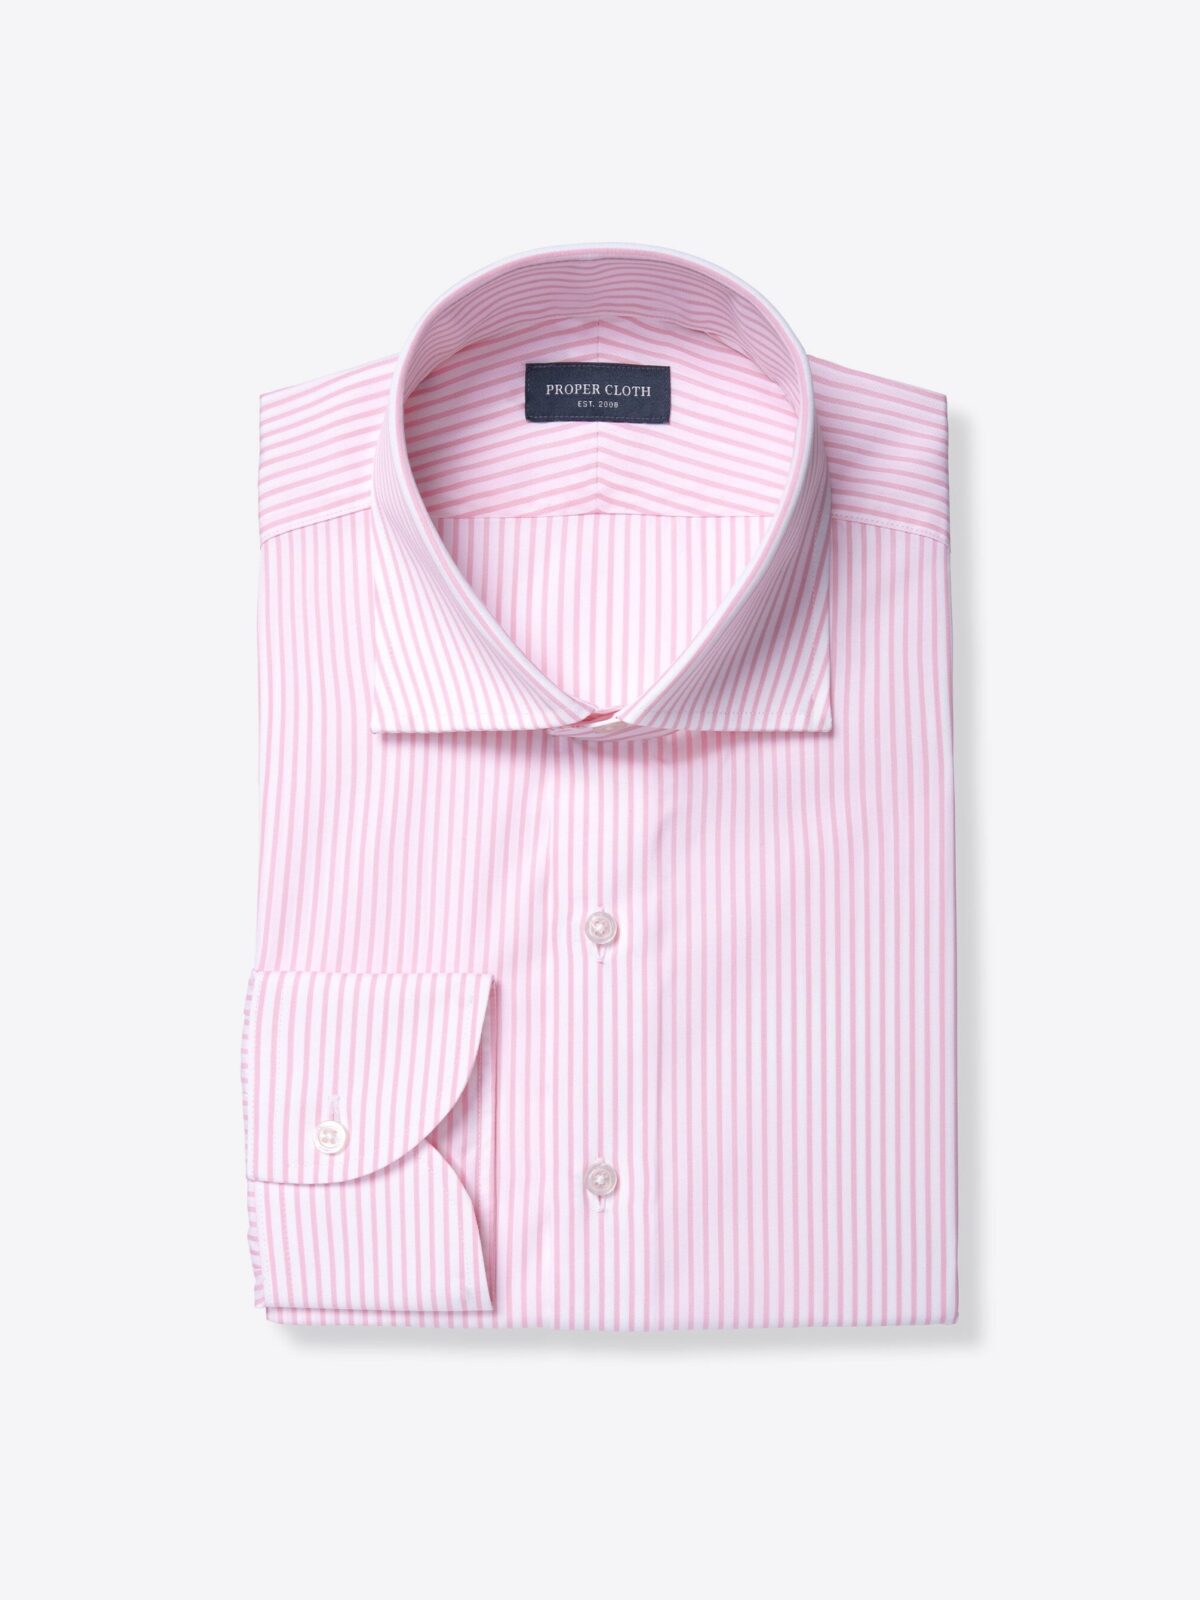 Stanton 120s Pink Stripe Custom Dress Shirt Shirt by Proper Cloth